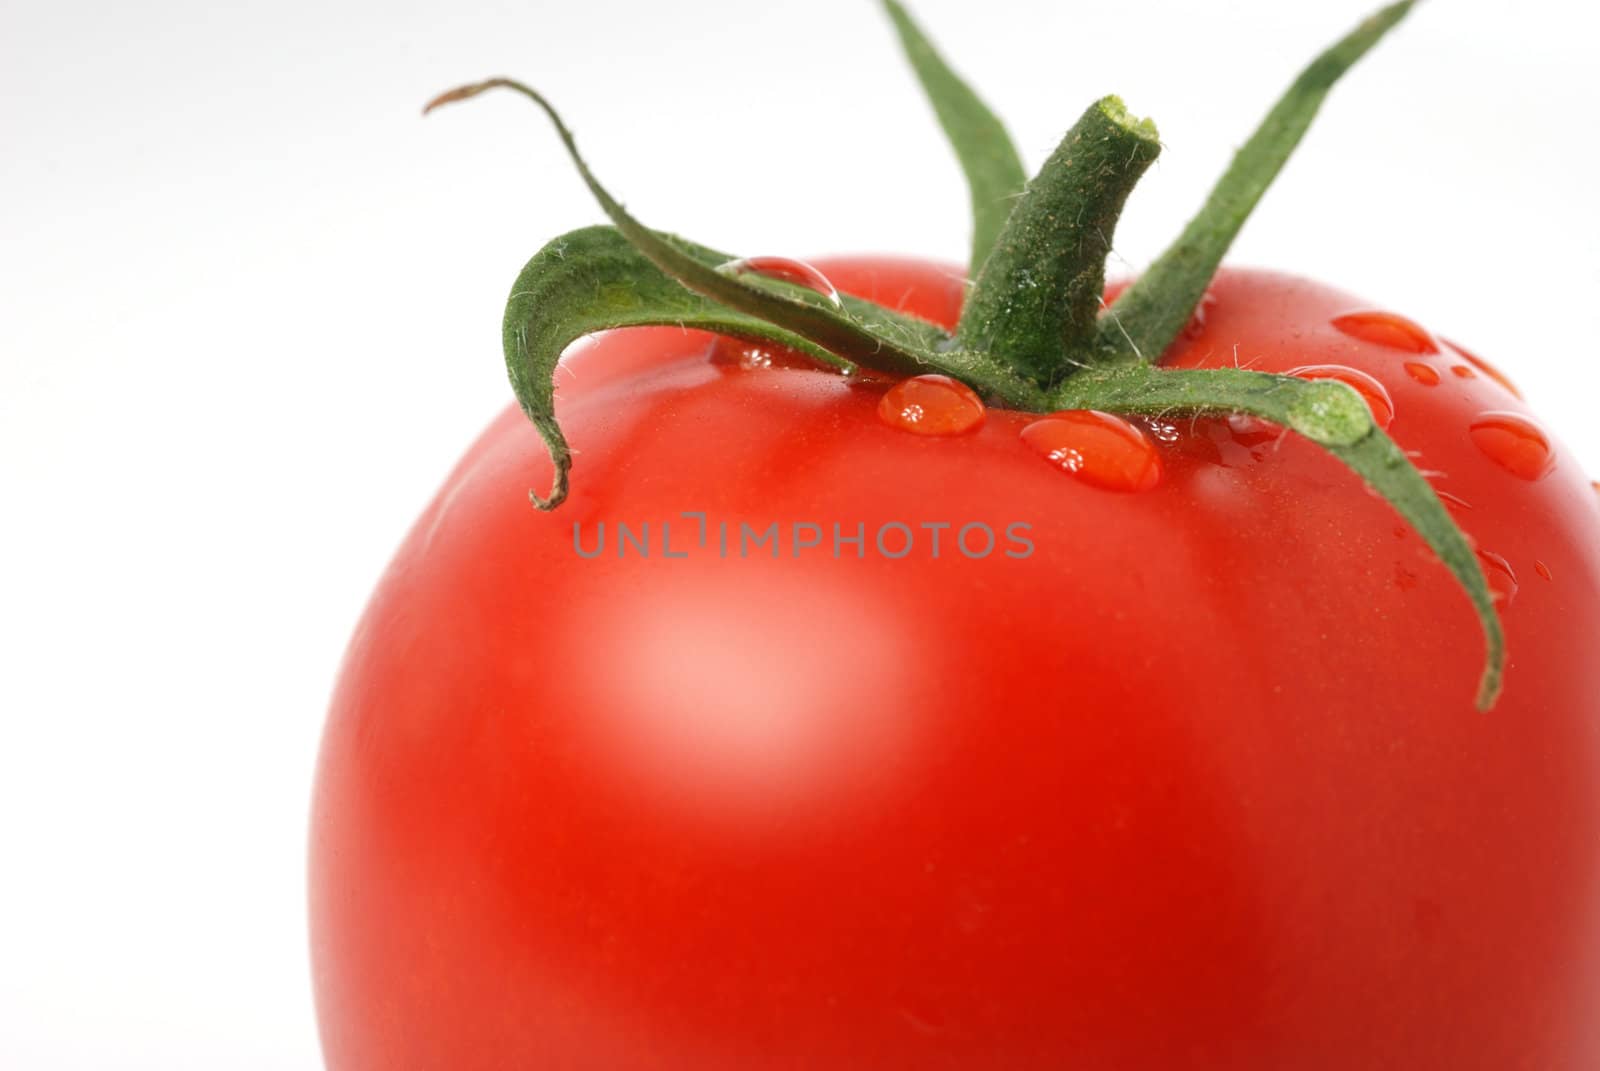 Tomato macro photo by galdzer